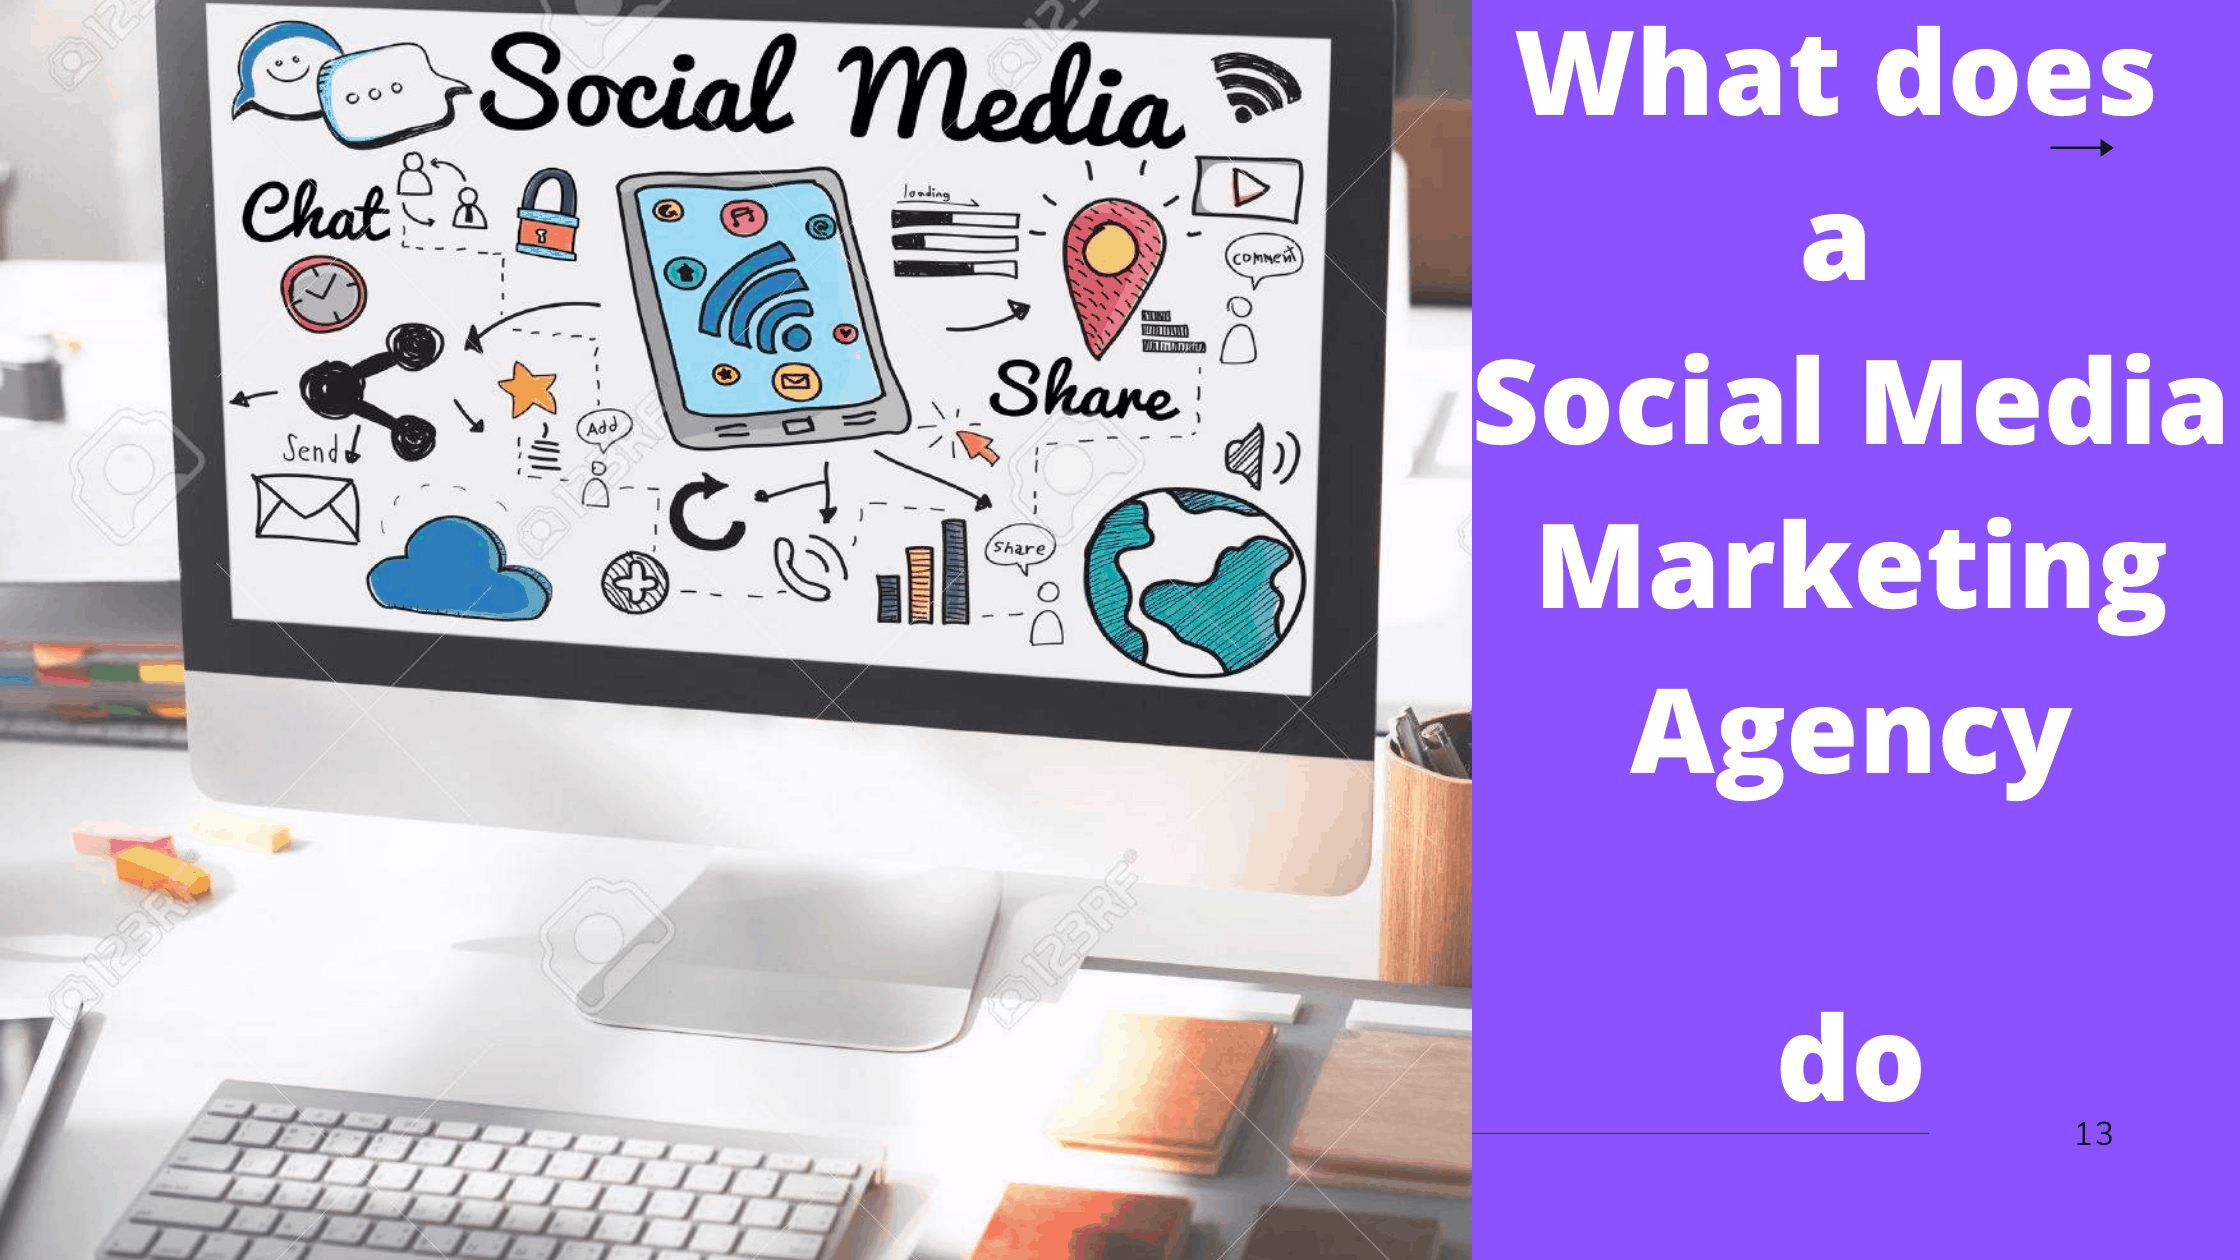 What does a social media marketing agency do